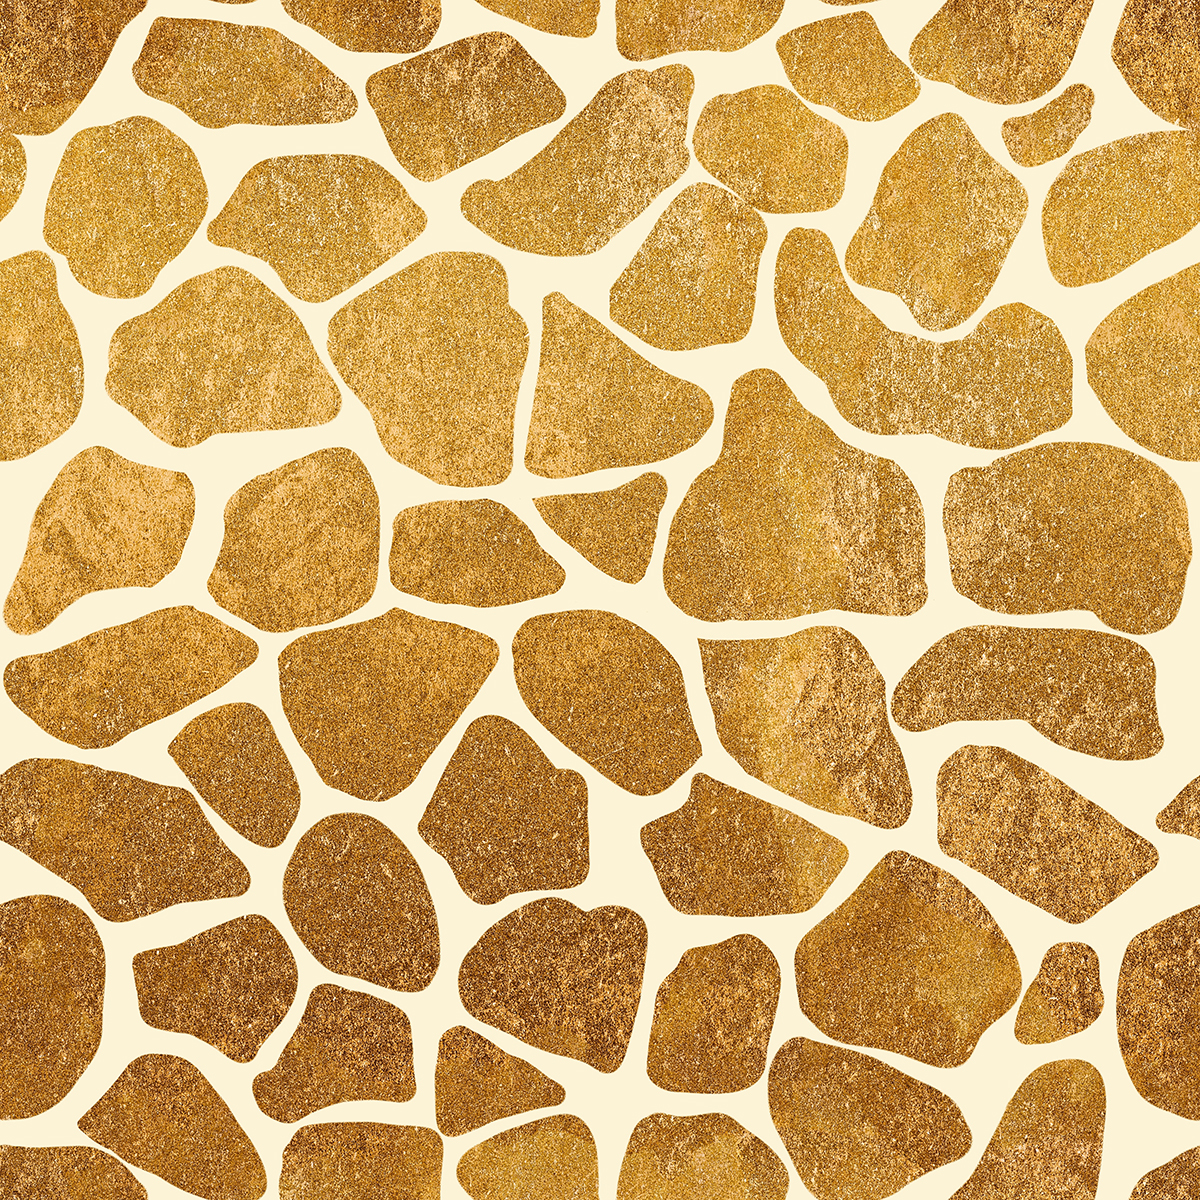 A pattern of gold rocks